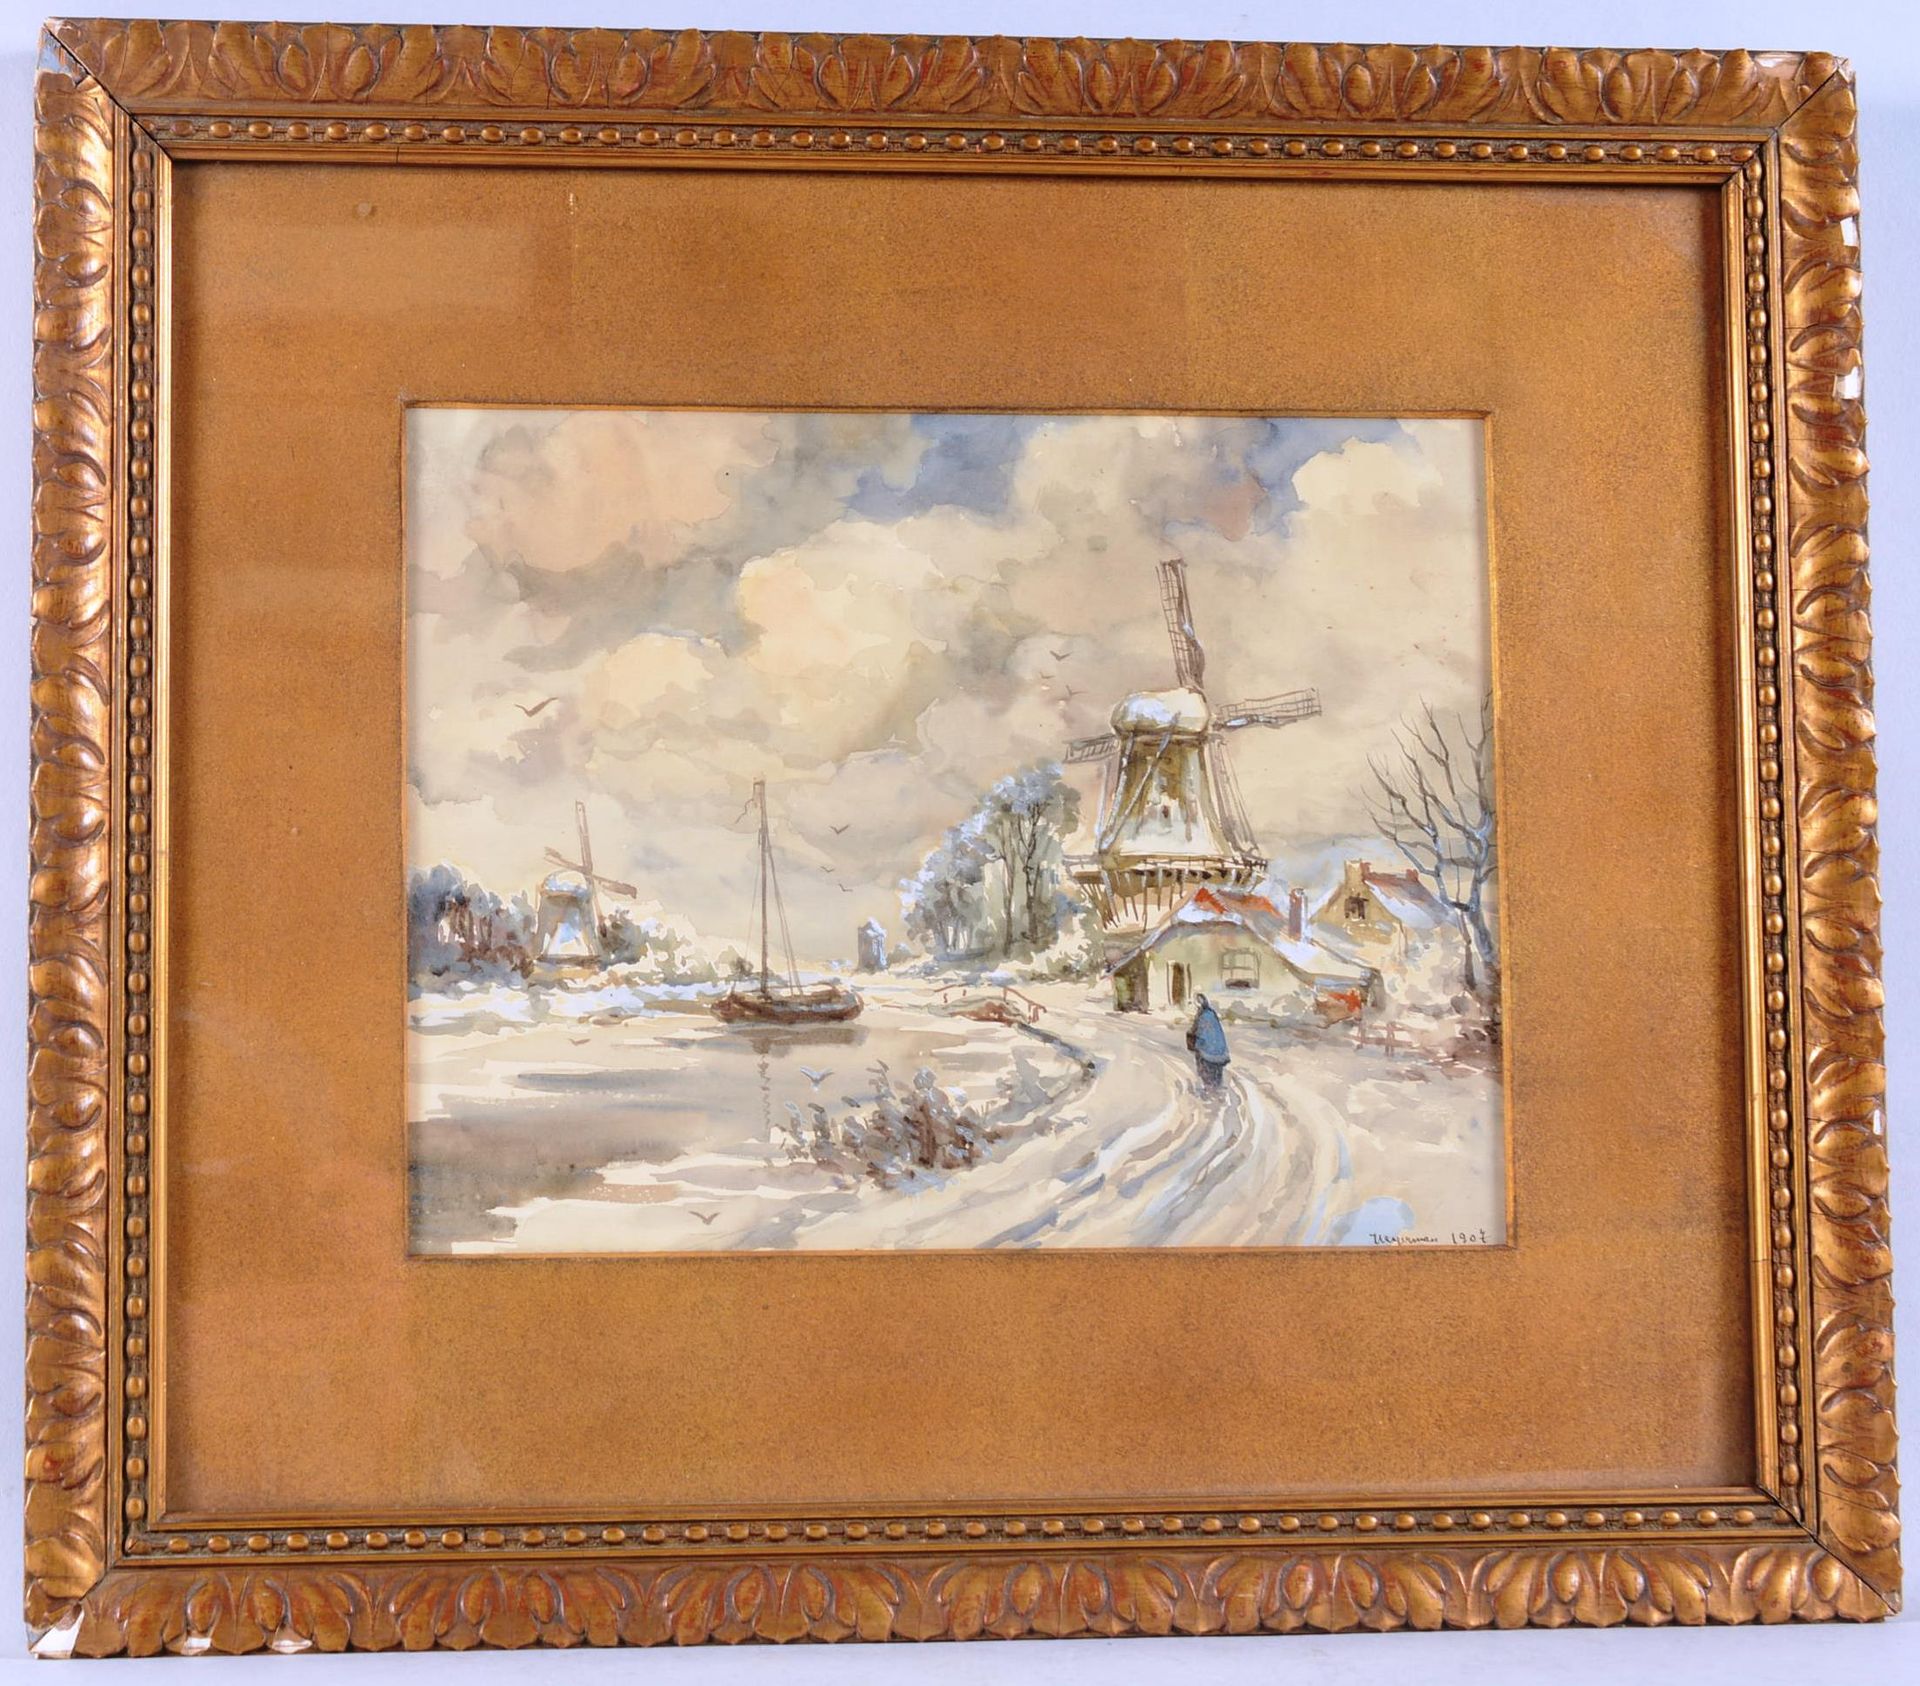 " Paysage d'hiver avec moulin" Marie HEYERMANS (1859-1937)

"Winterlandschaft mi&hellip;